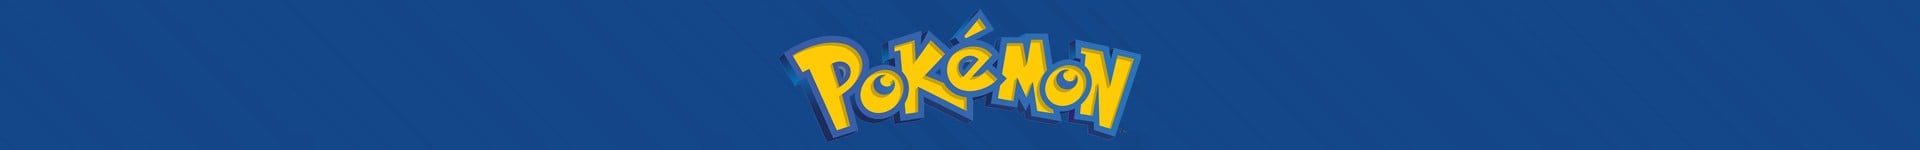 Pokémon-spel